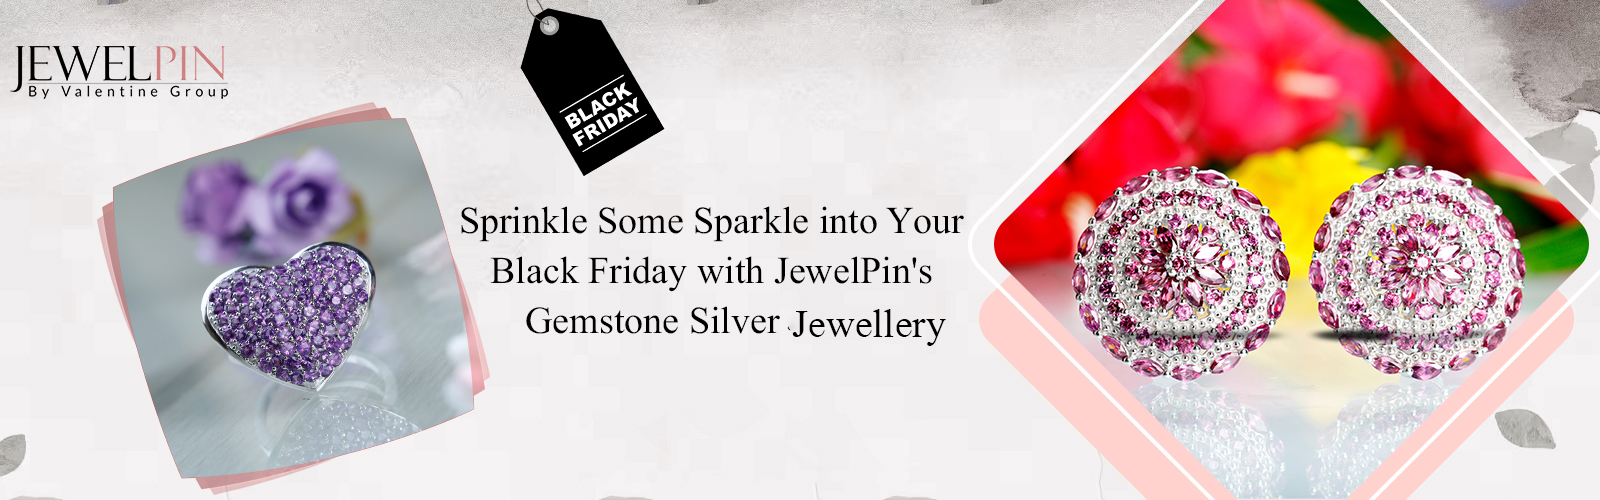 Add Sparkle to Black Friday with Gemstone Silver Jewellery